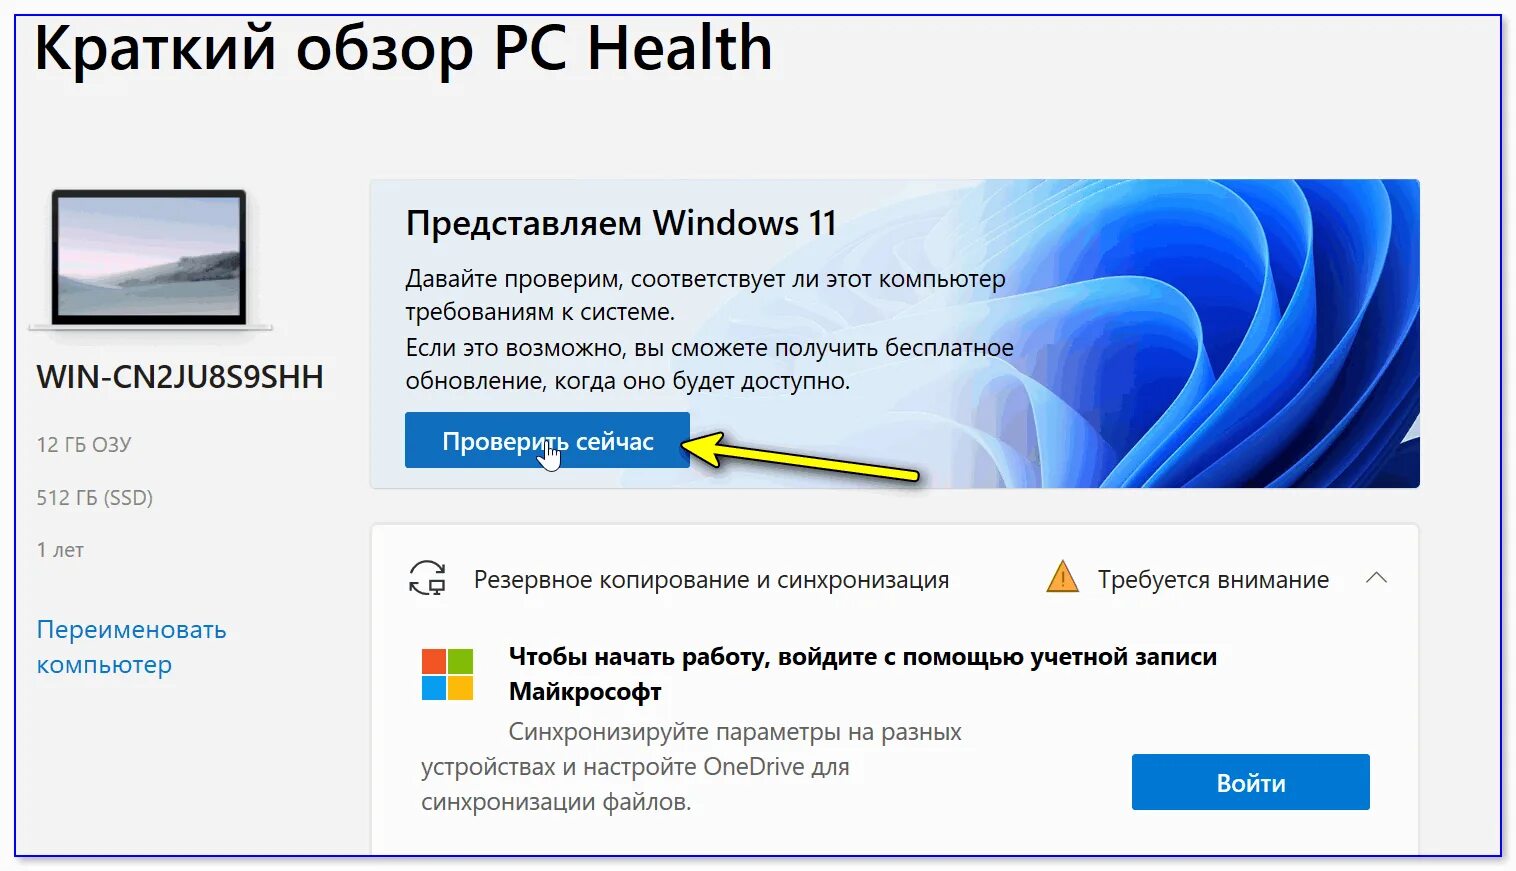 Windows 11 вылетает. Windows 11 компьютер. Проверка работоспособности ПК Windows. Windows 11 проверка совместимости. PC Health check Windows 11.